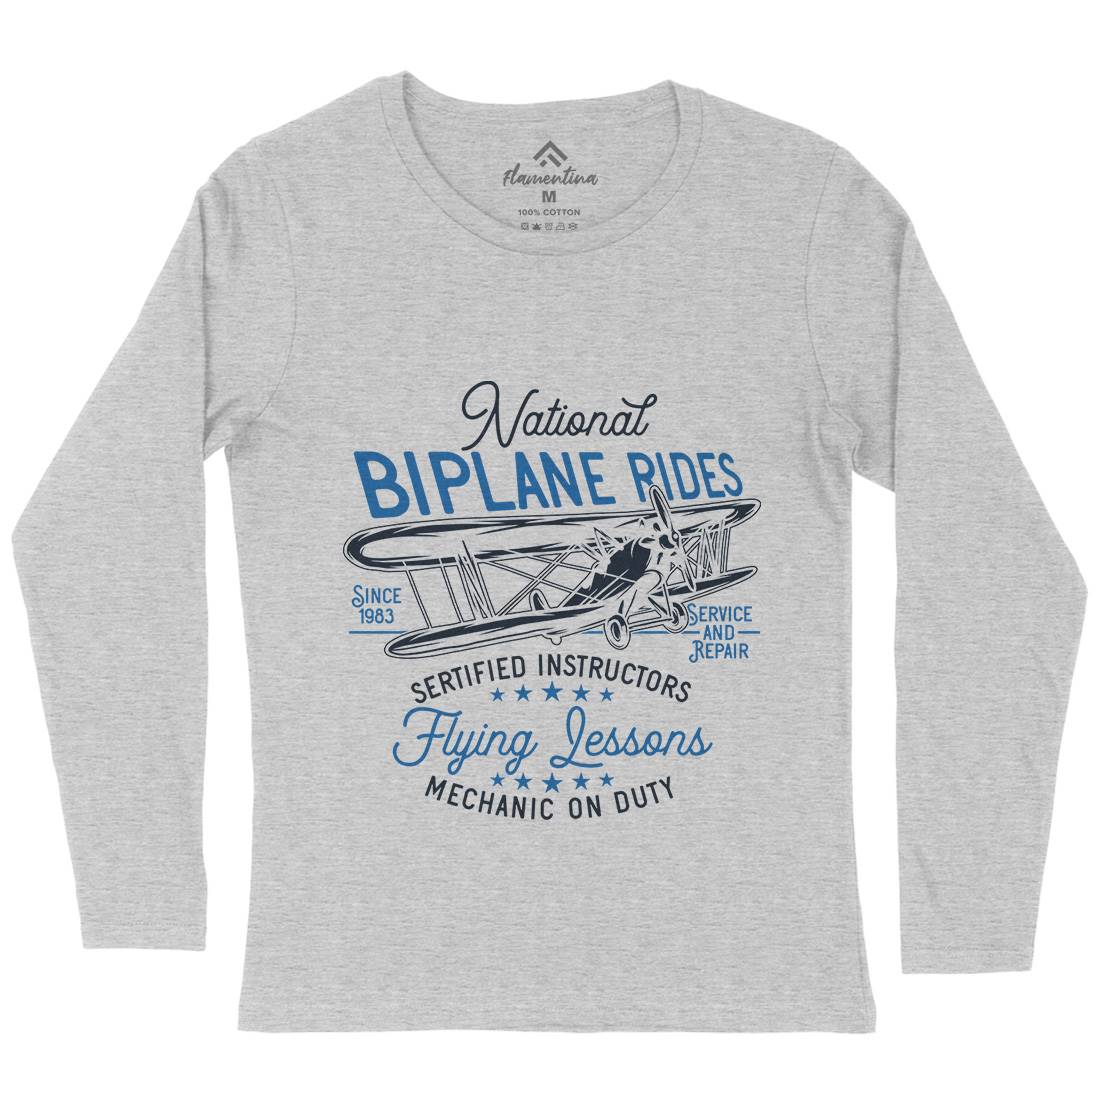 Biplane Rides Womens Long Sleeve T-Shirt Vehicles D910